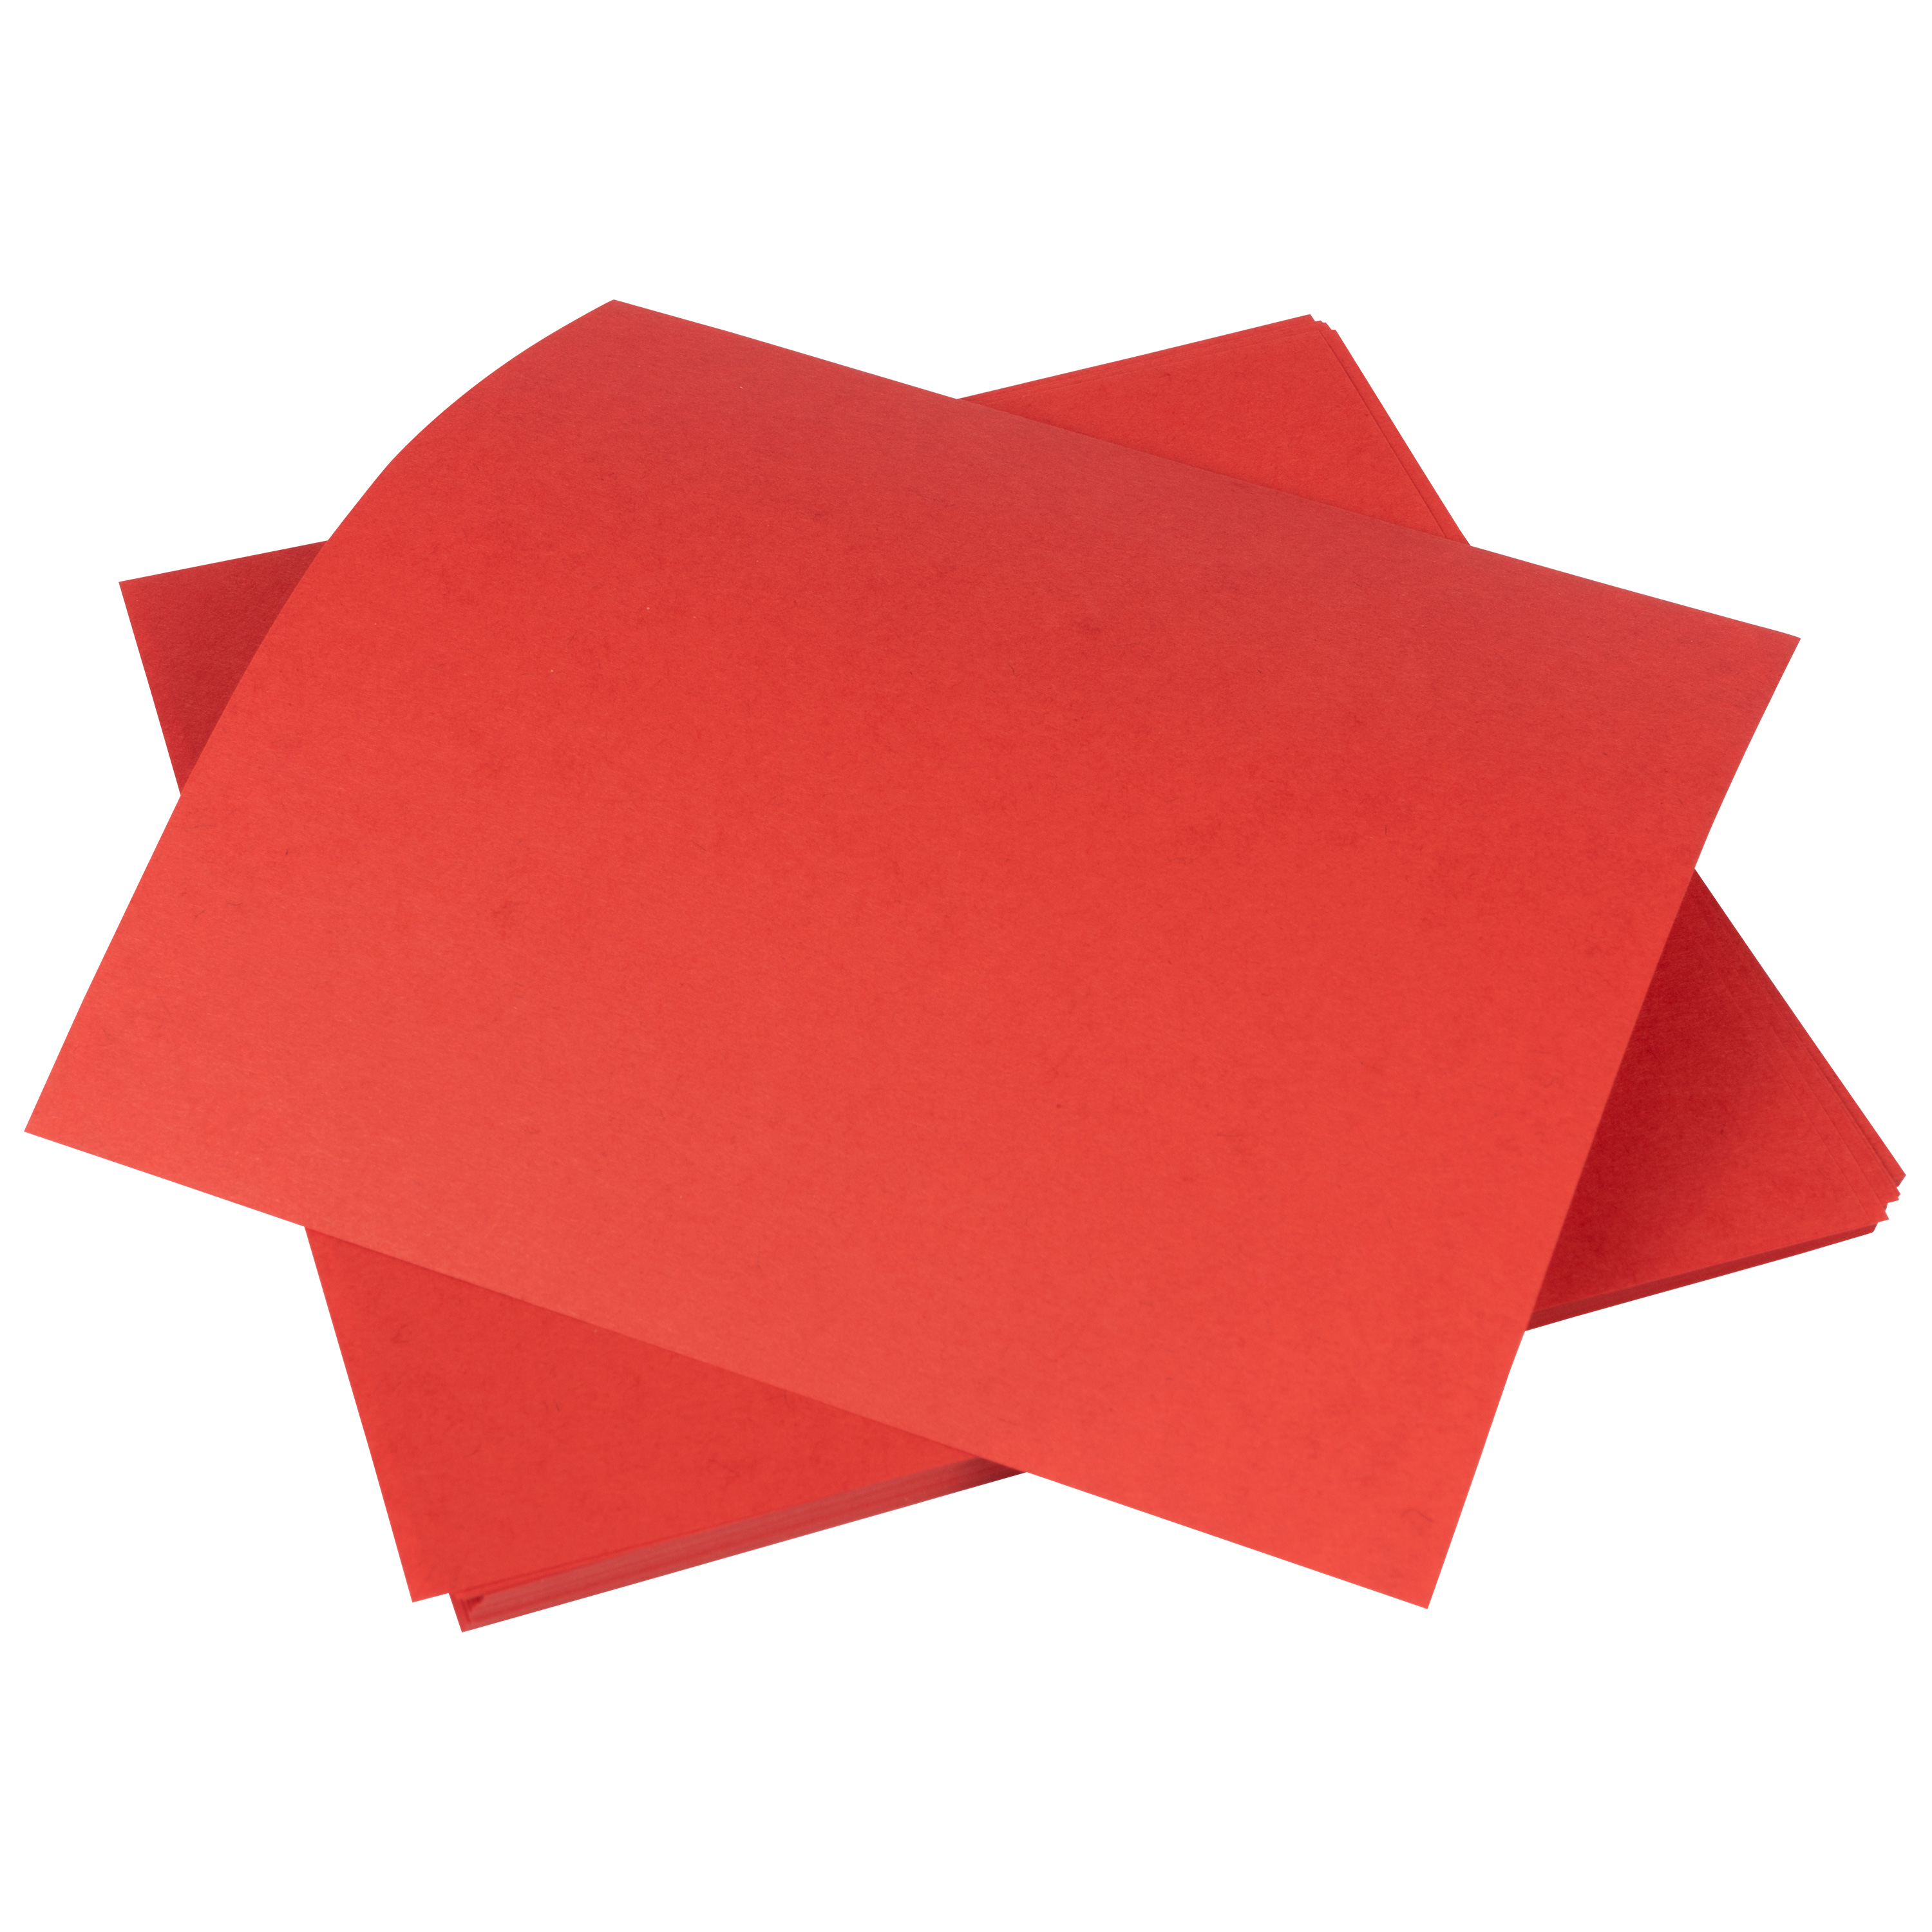 Origami Faltblätter 'Uni Intensiv', 15 x 15 cm, rot